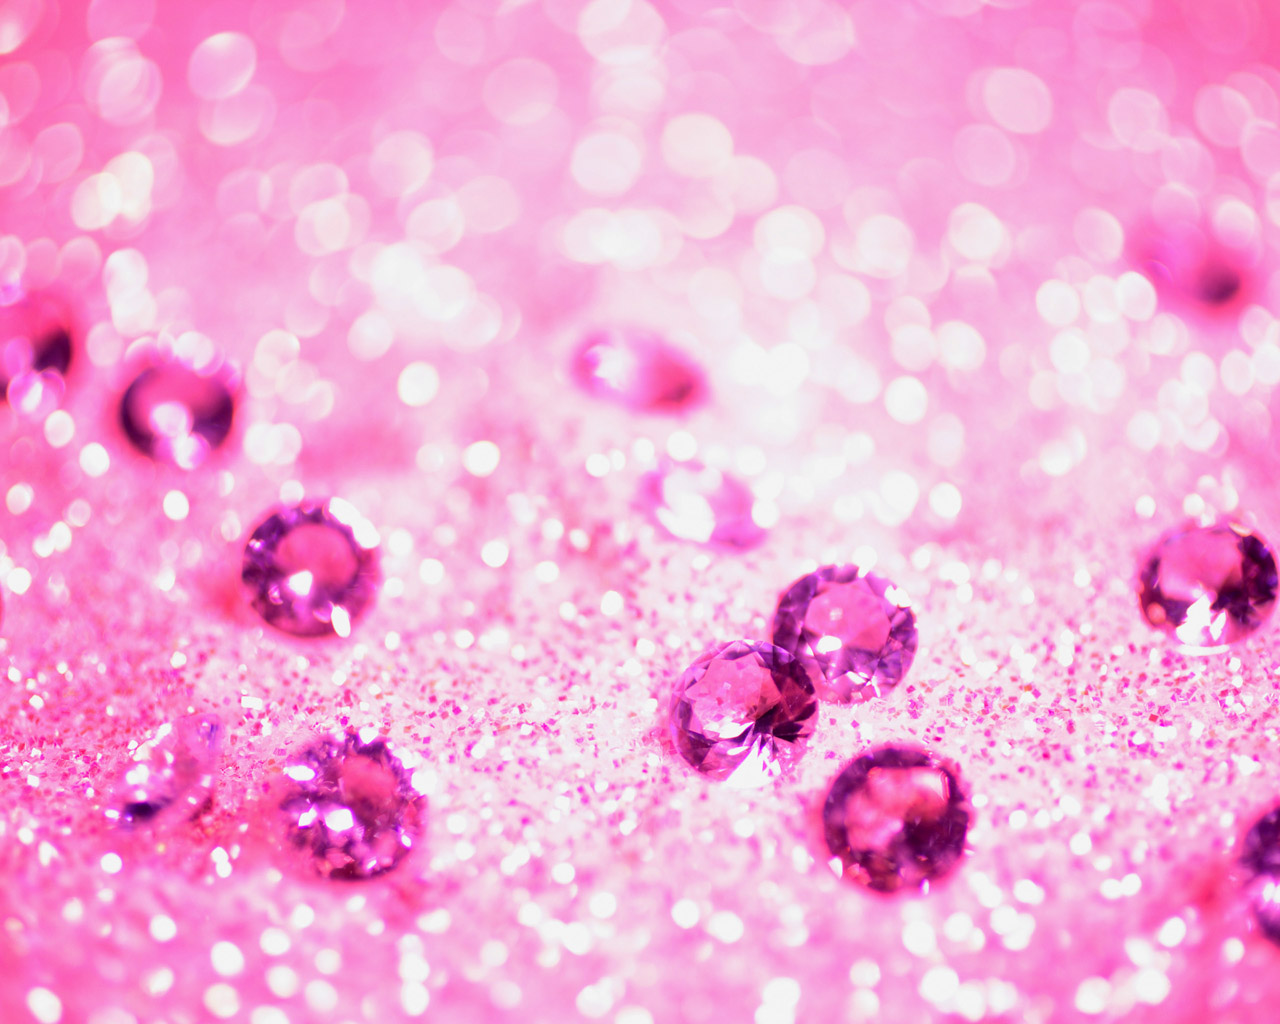 micromax live wallpaper,pink,water,purple,liquid bubble,close up